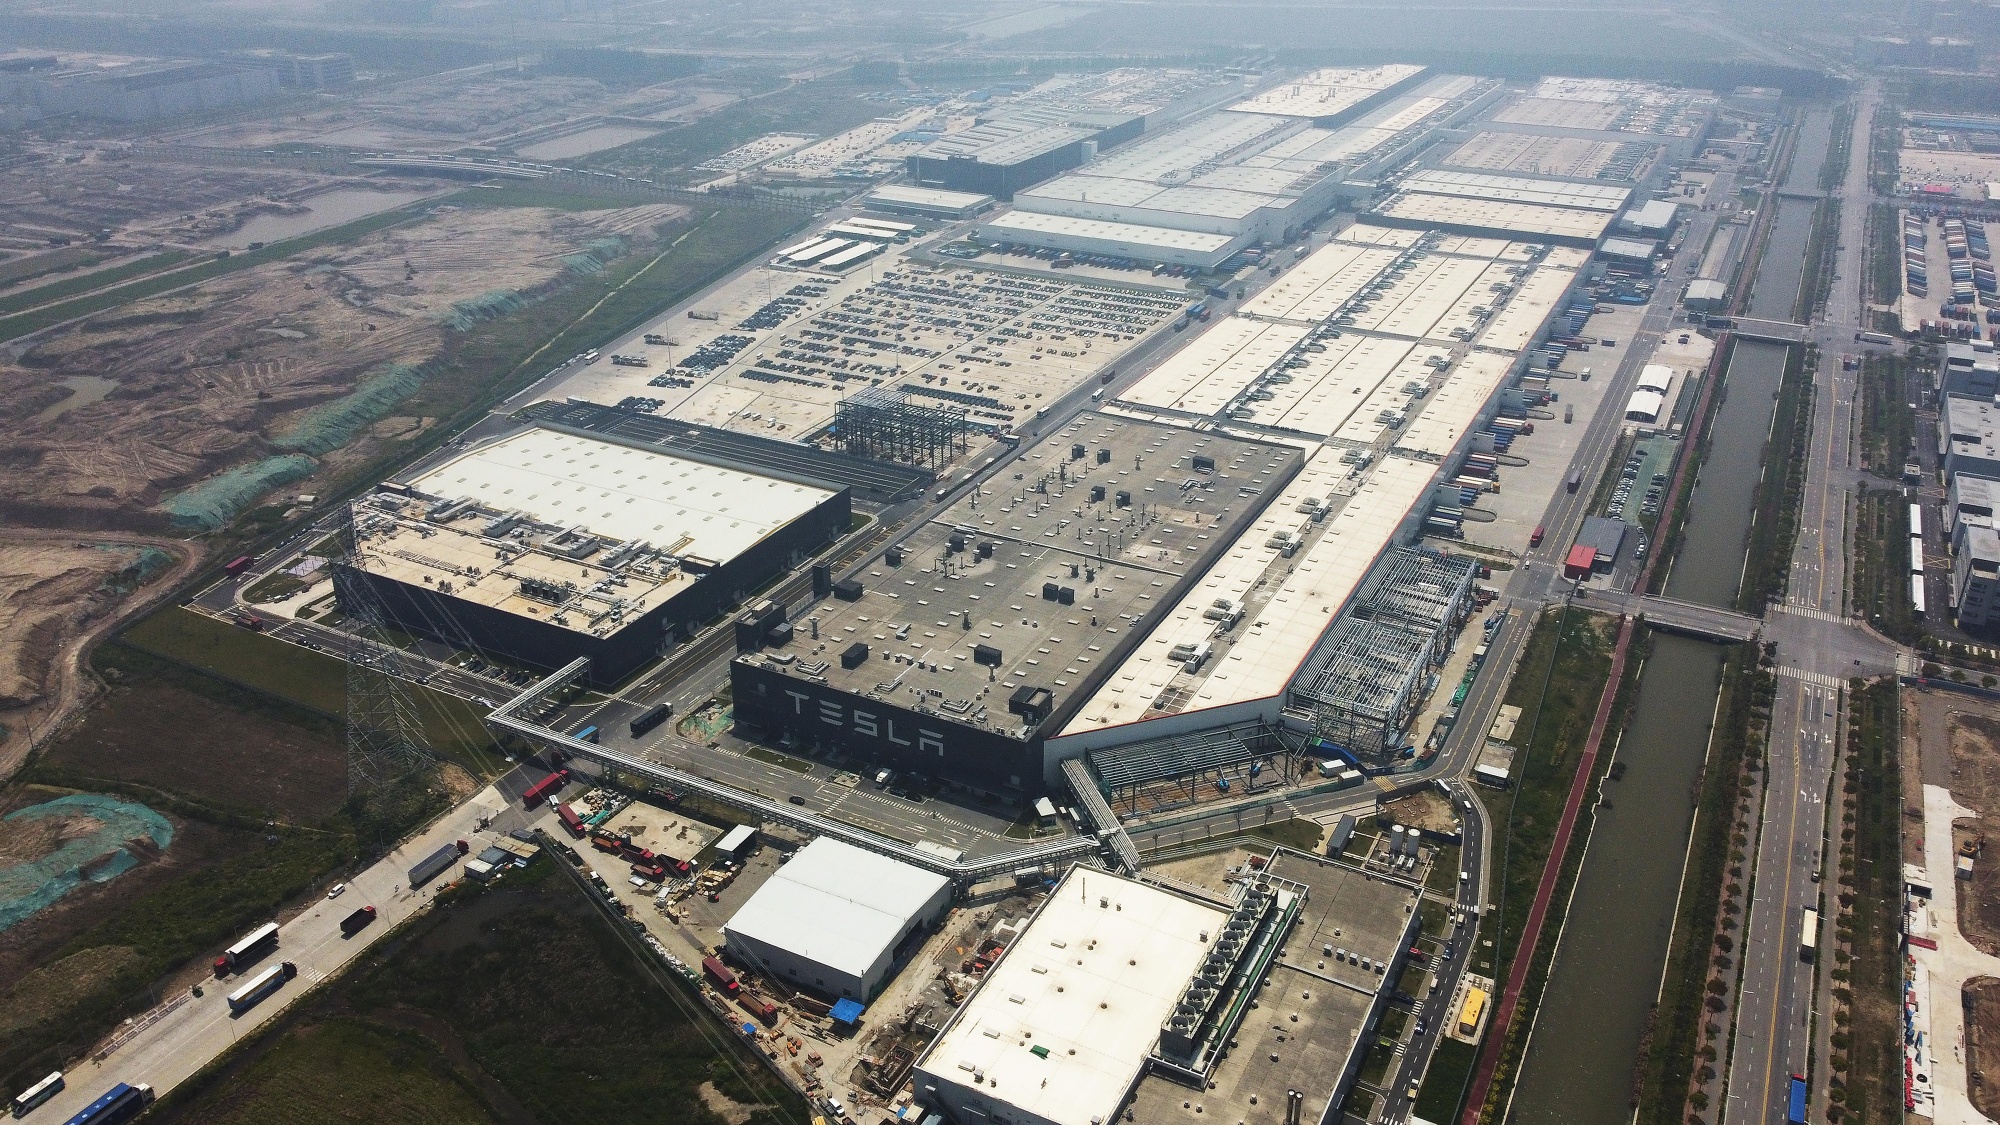 Tesla (TSLA) China Shipments Soar to Record as Shanghai Factory